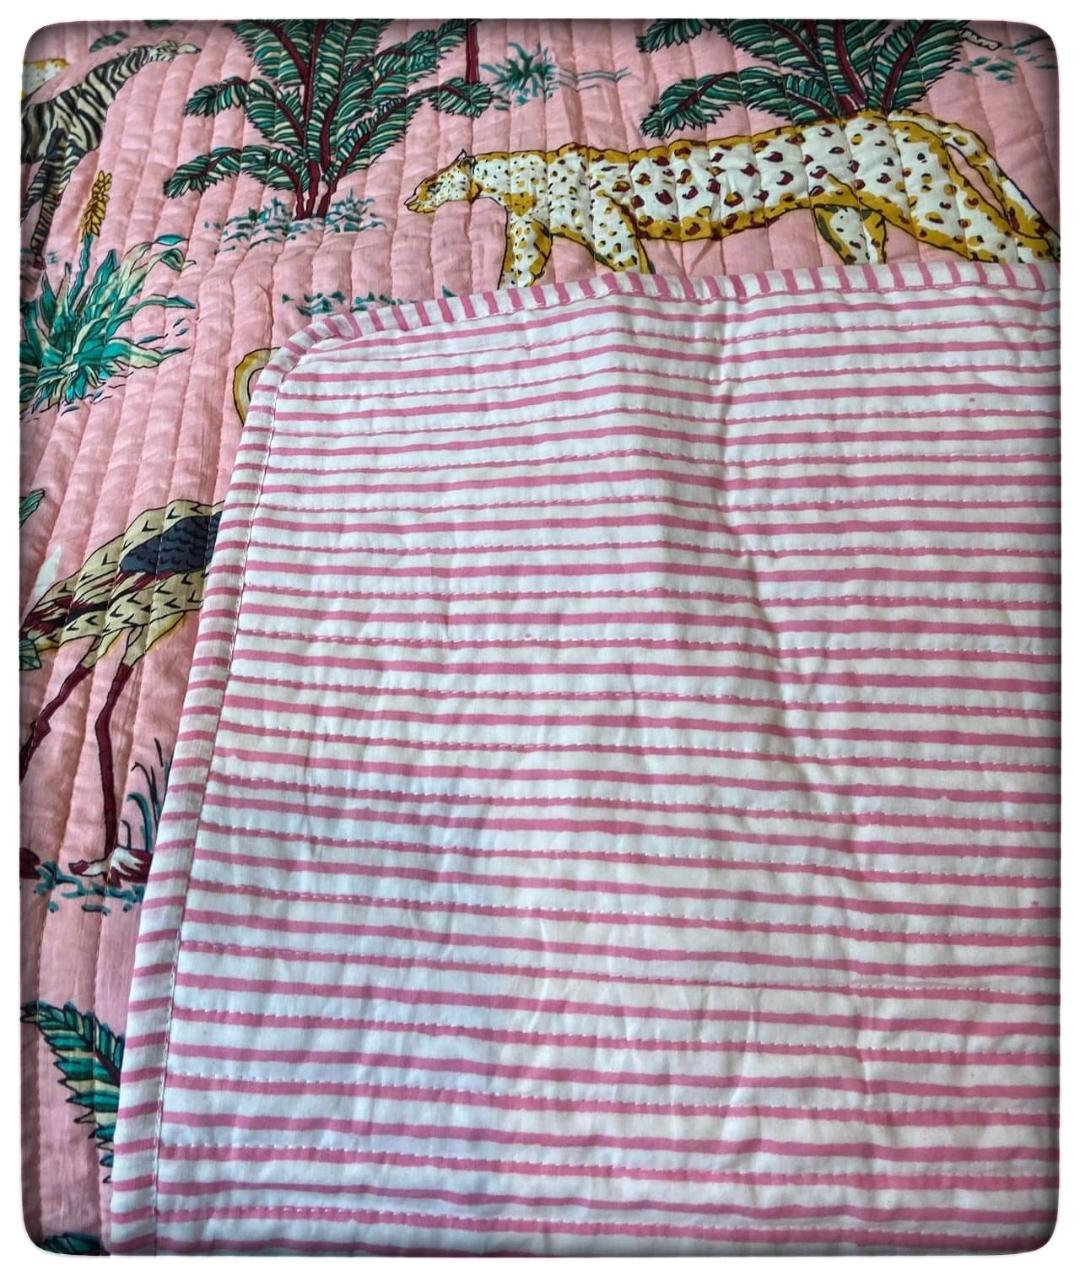 Pink Jungle Animal Print, Zebra, Leopards & Palm Tree Baby Quilt